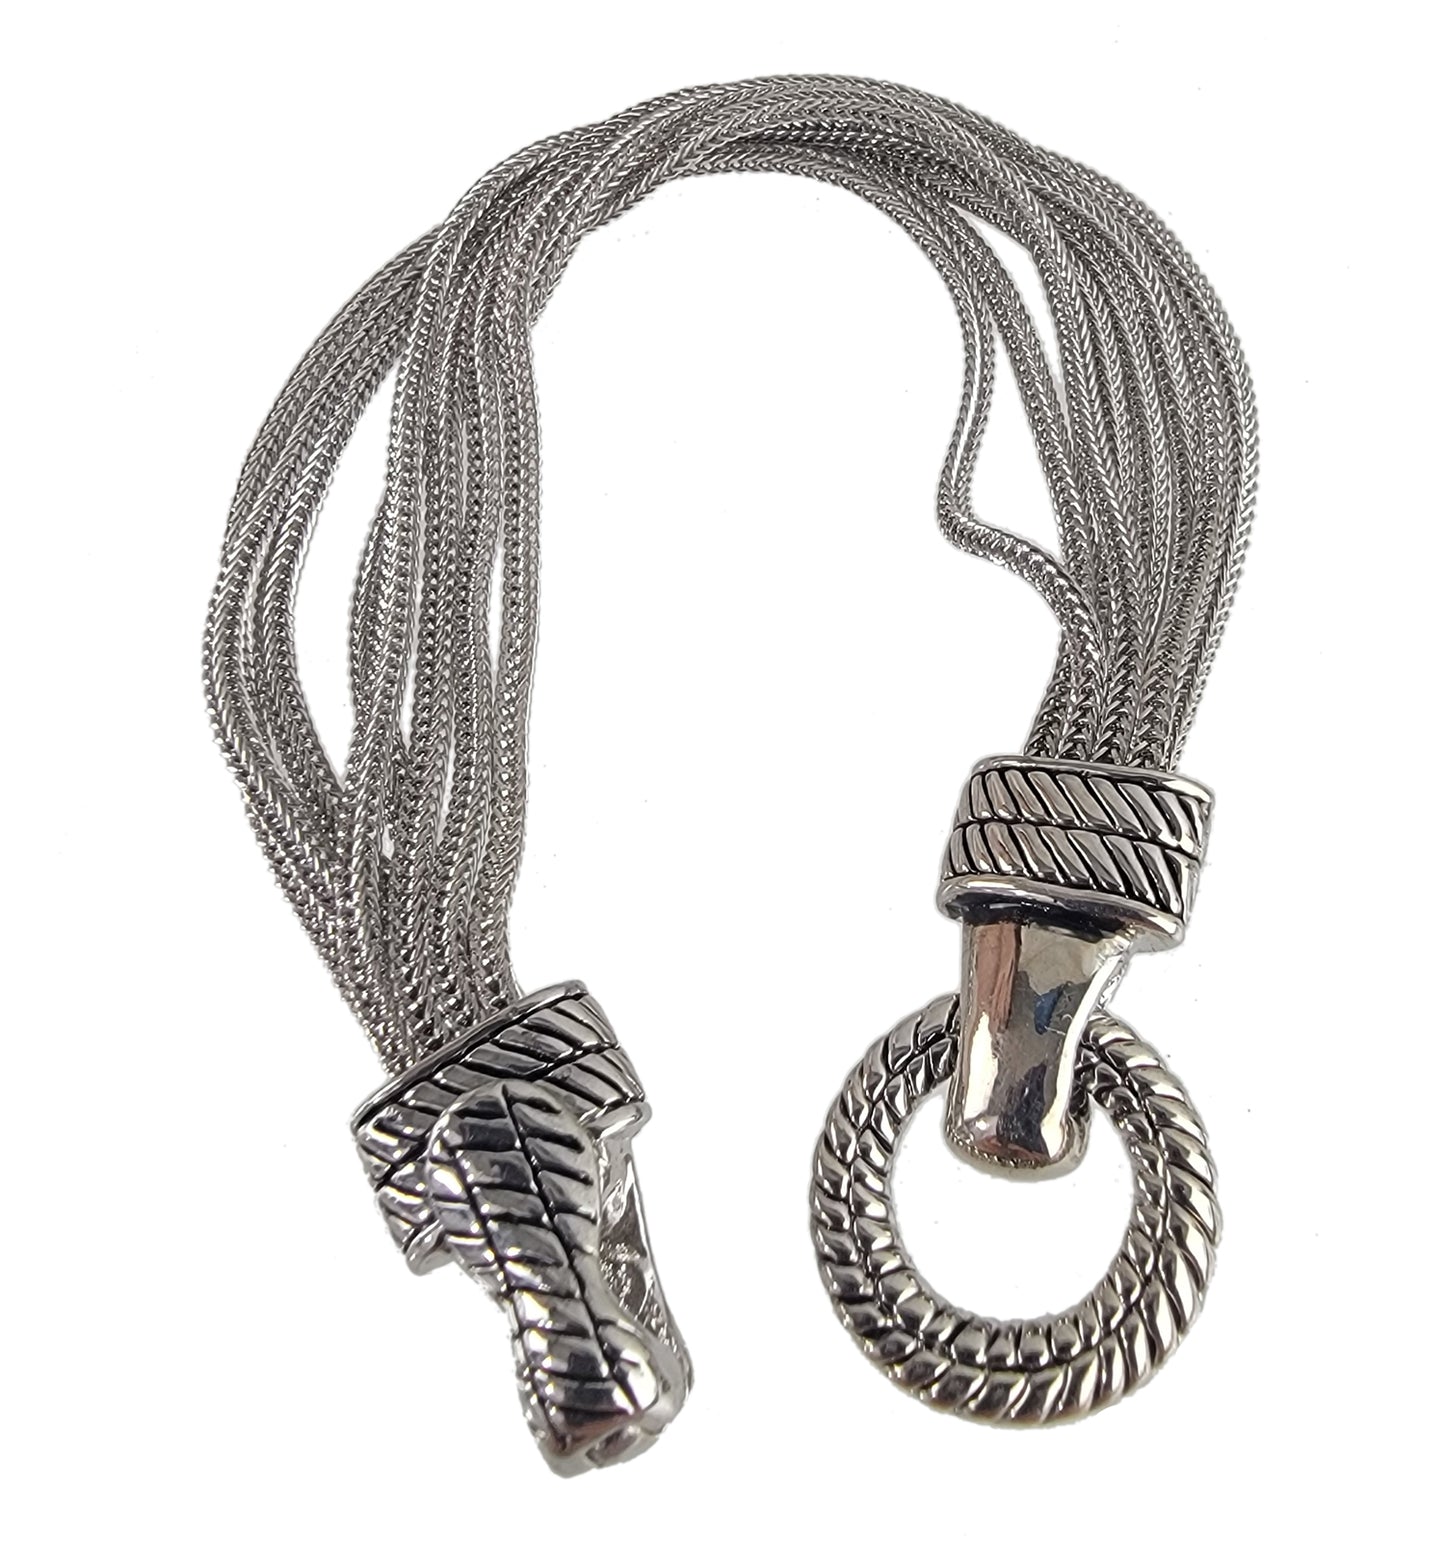 Premier Designs Multistrand Wheat Chain Silver Tone Bracelet Magnetic Clasp 7.5"